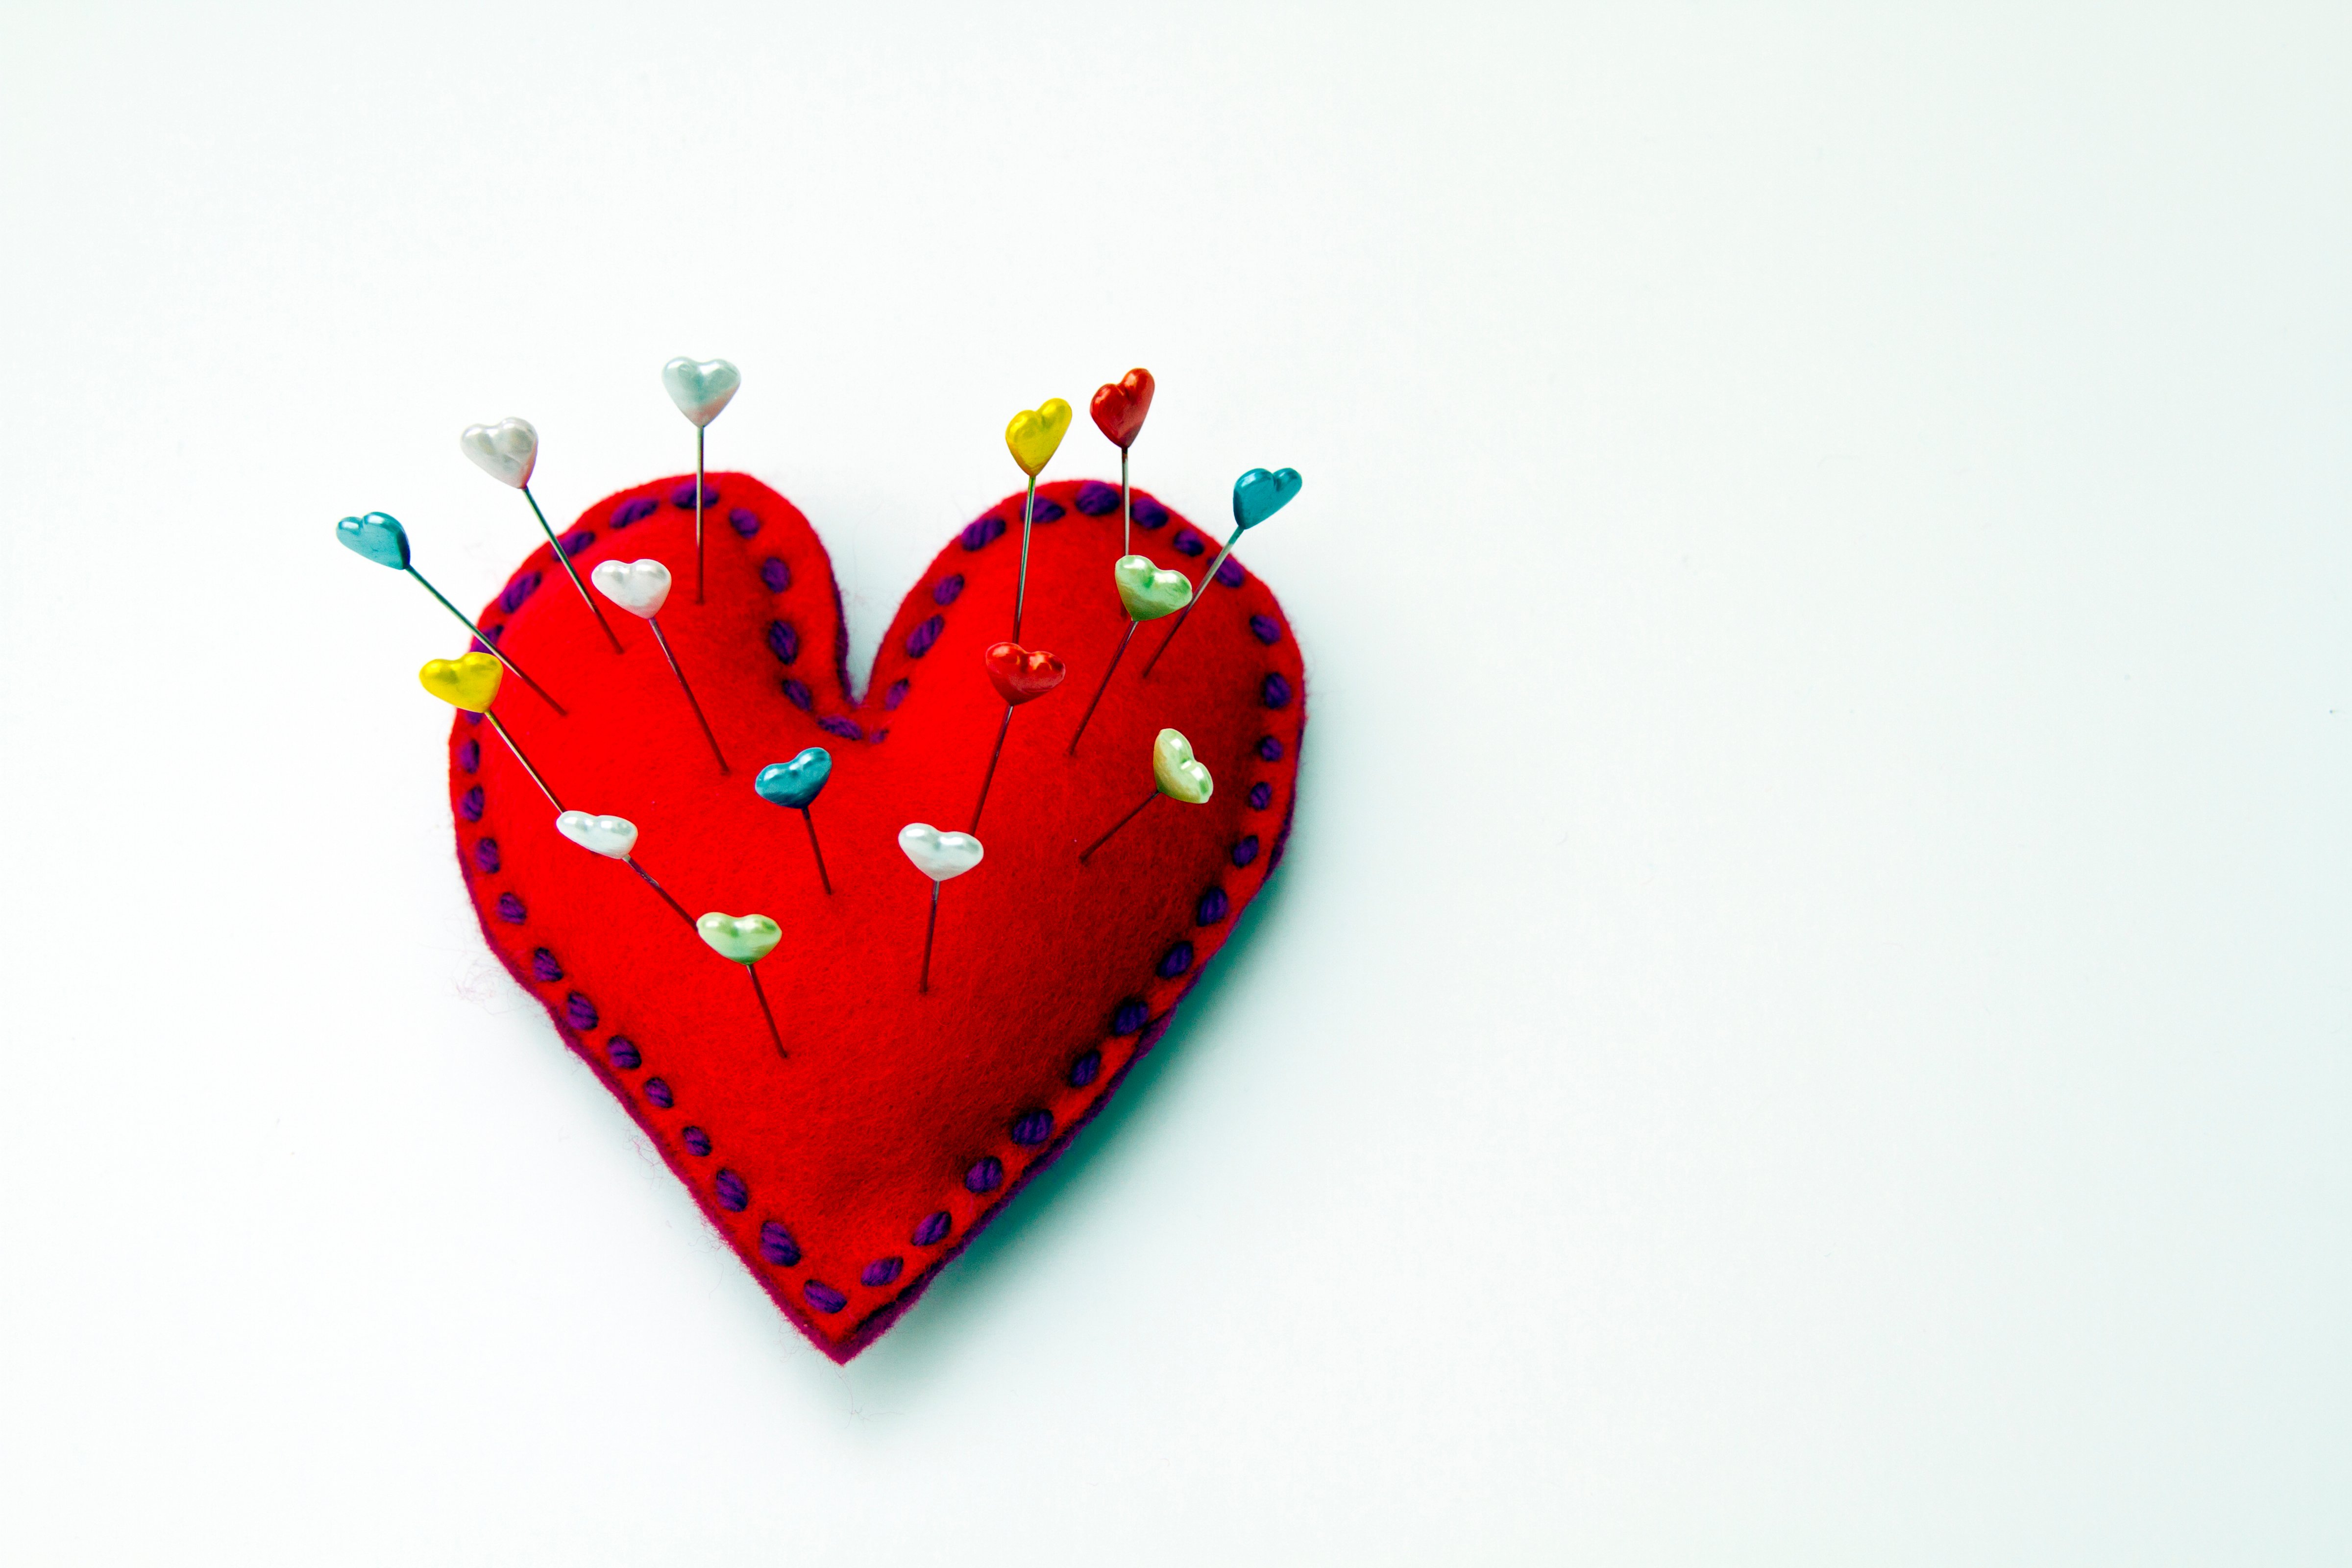 Heart shaped pin cushion with heart pins